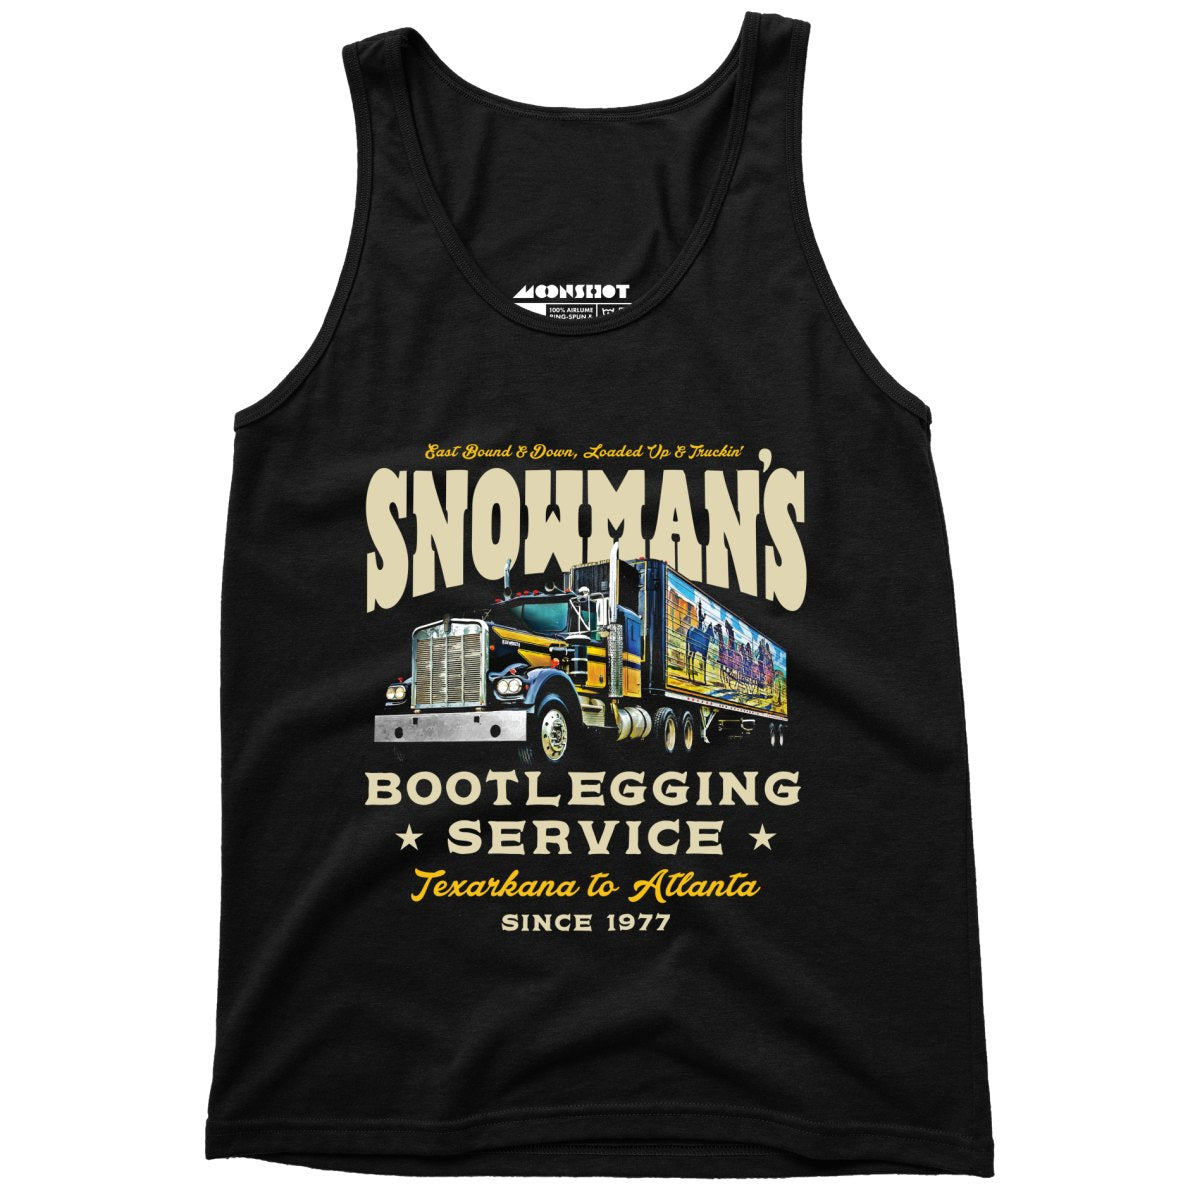 Snowman's Bootlegging Service - Unisex Tank Top